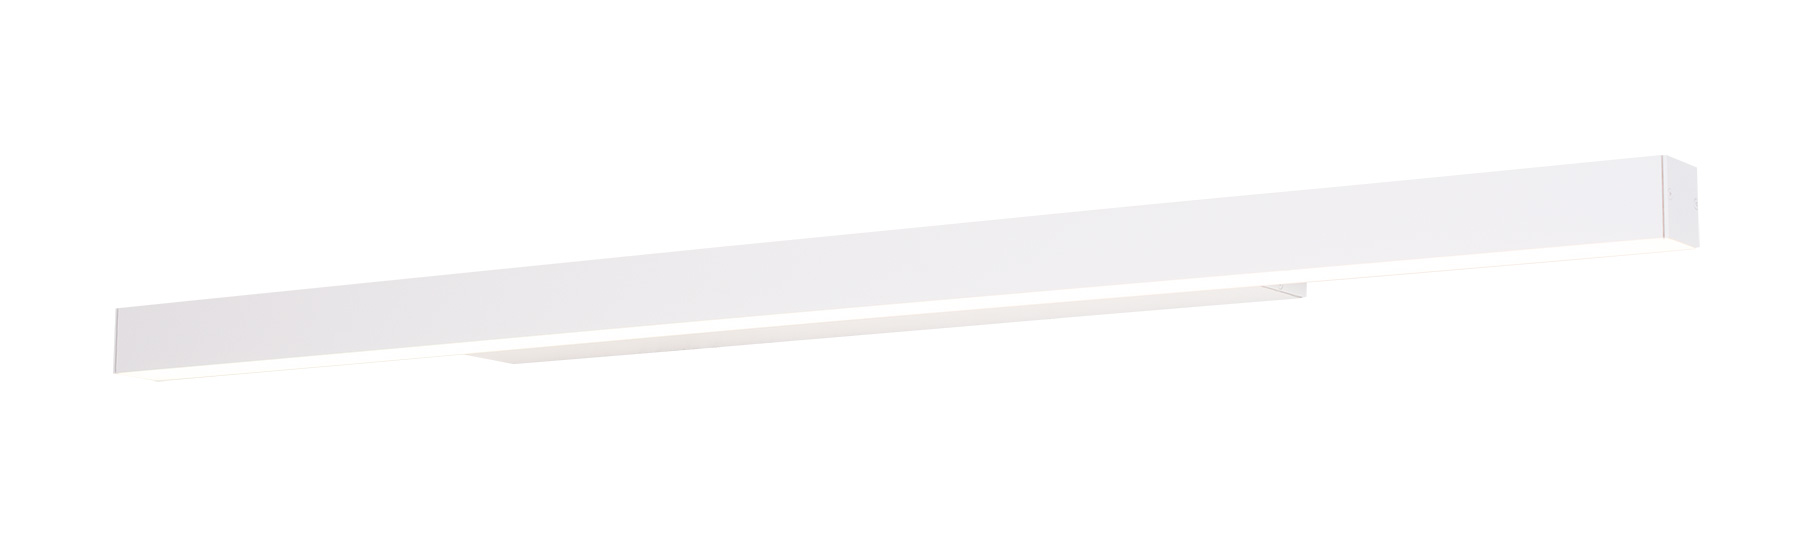 LINEAR W0265 Wandleuchte LED, Korpus: Weiß, Lampenschirm: Acrylglas